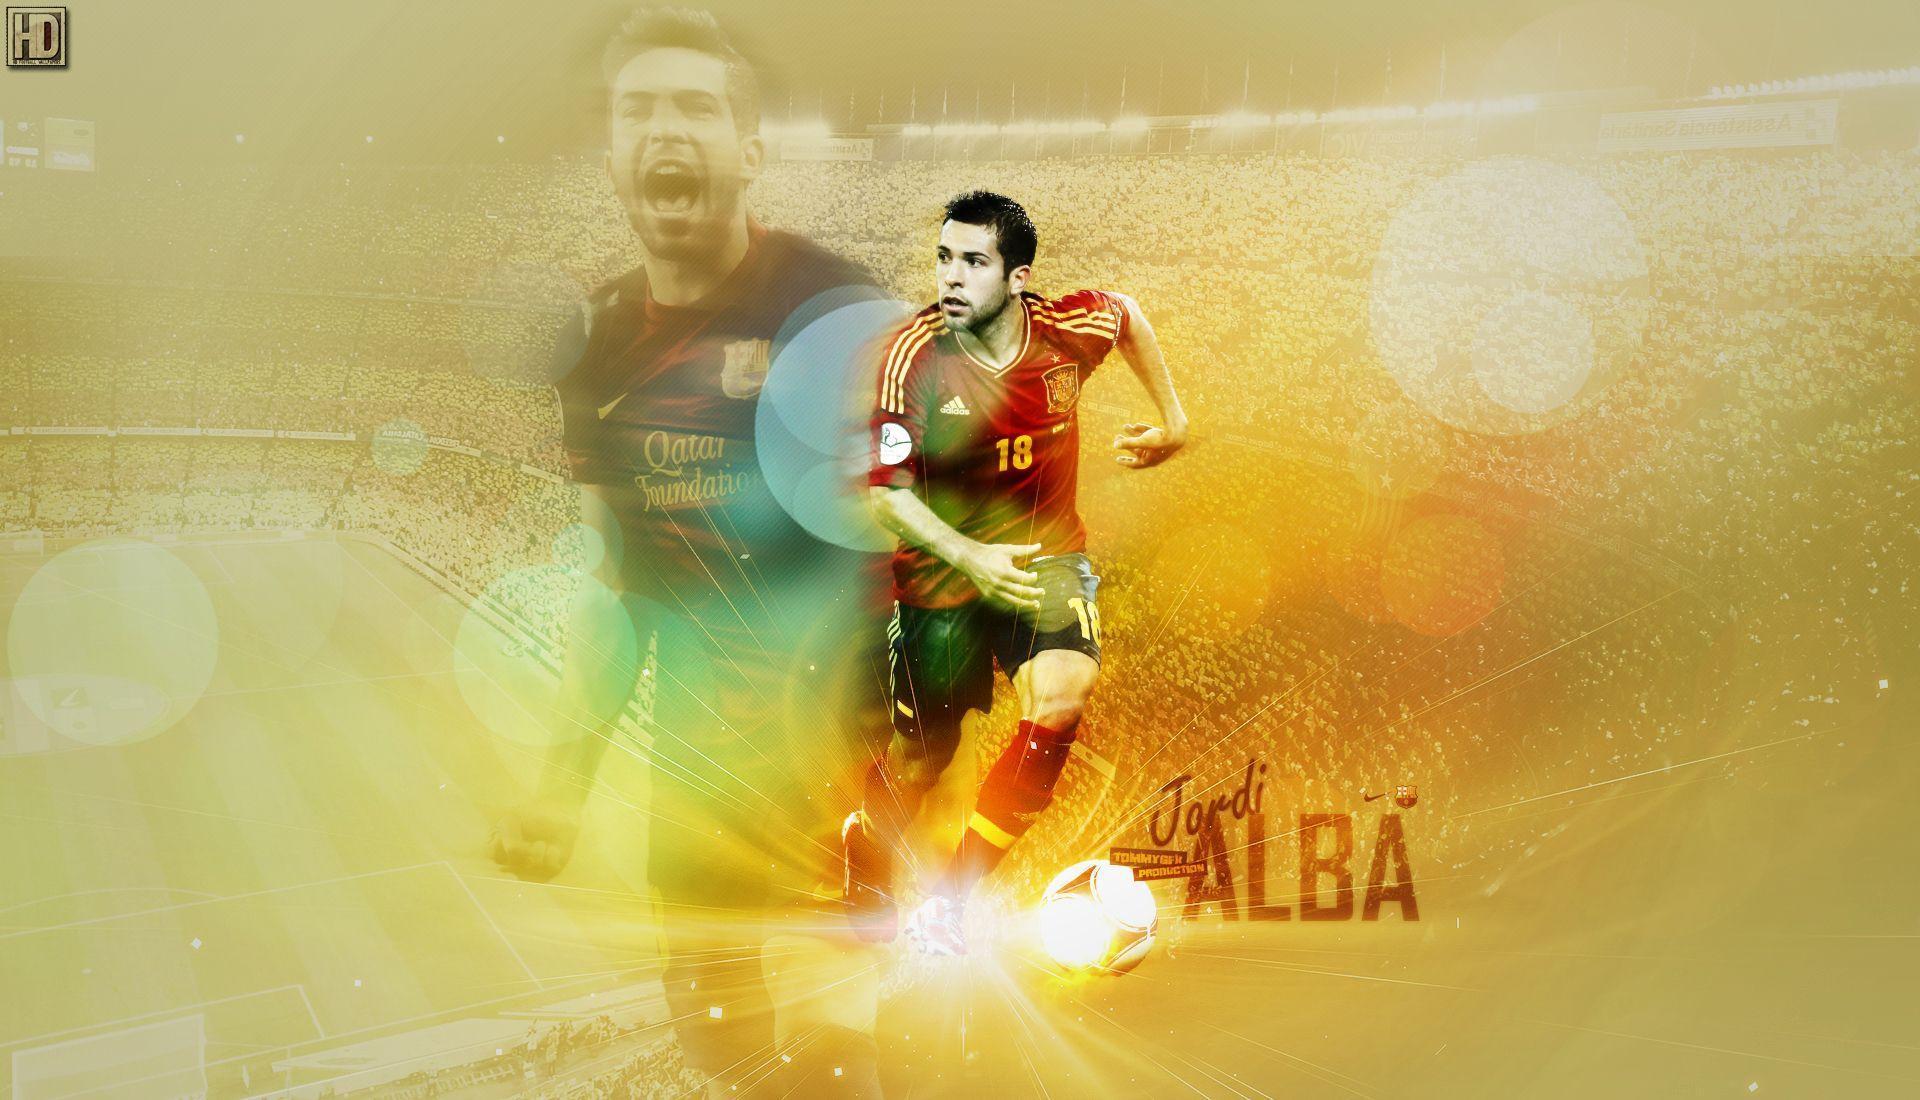 The halfback of Barcelona Jordi Alba wallpaper and image